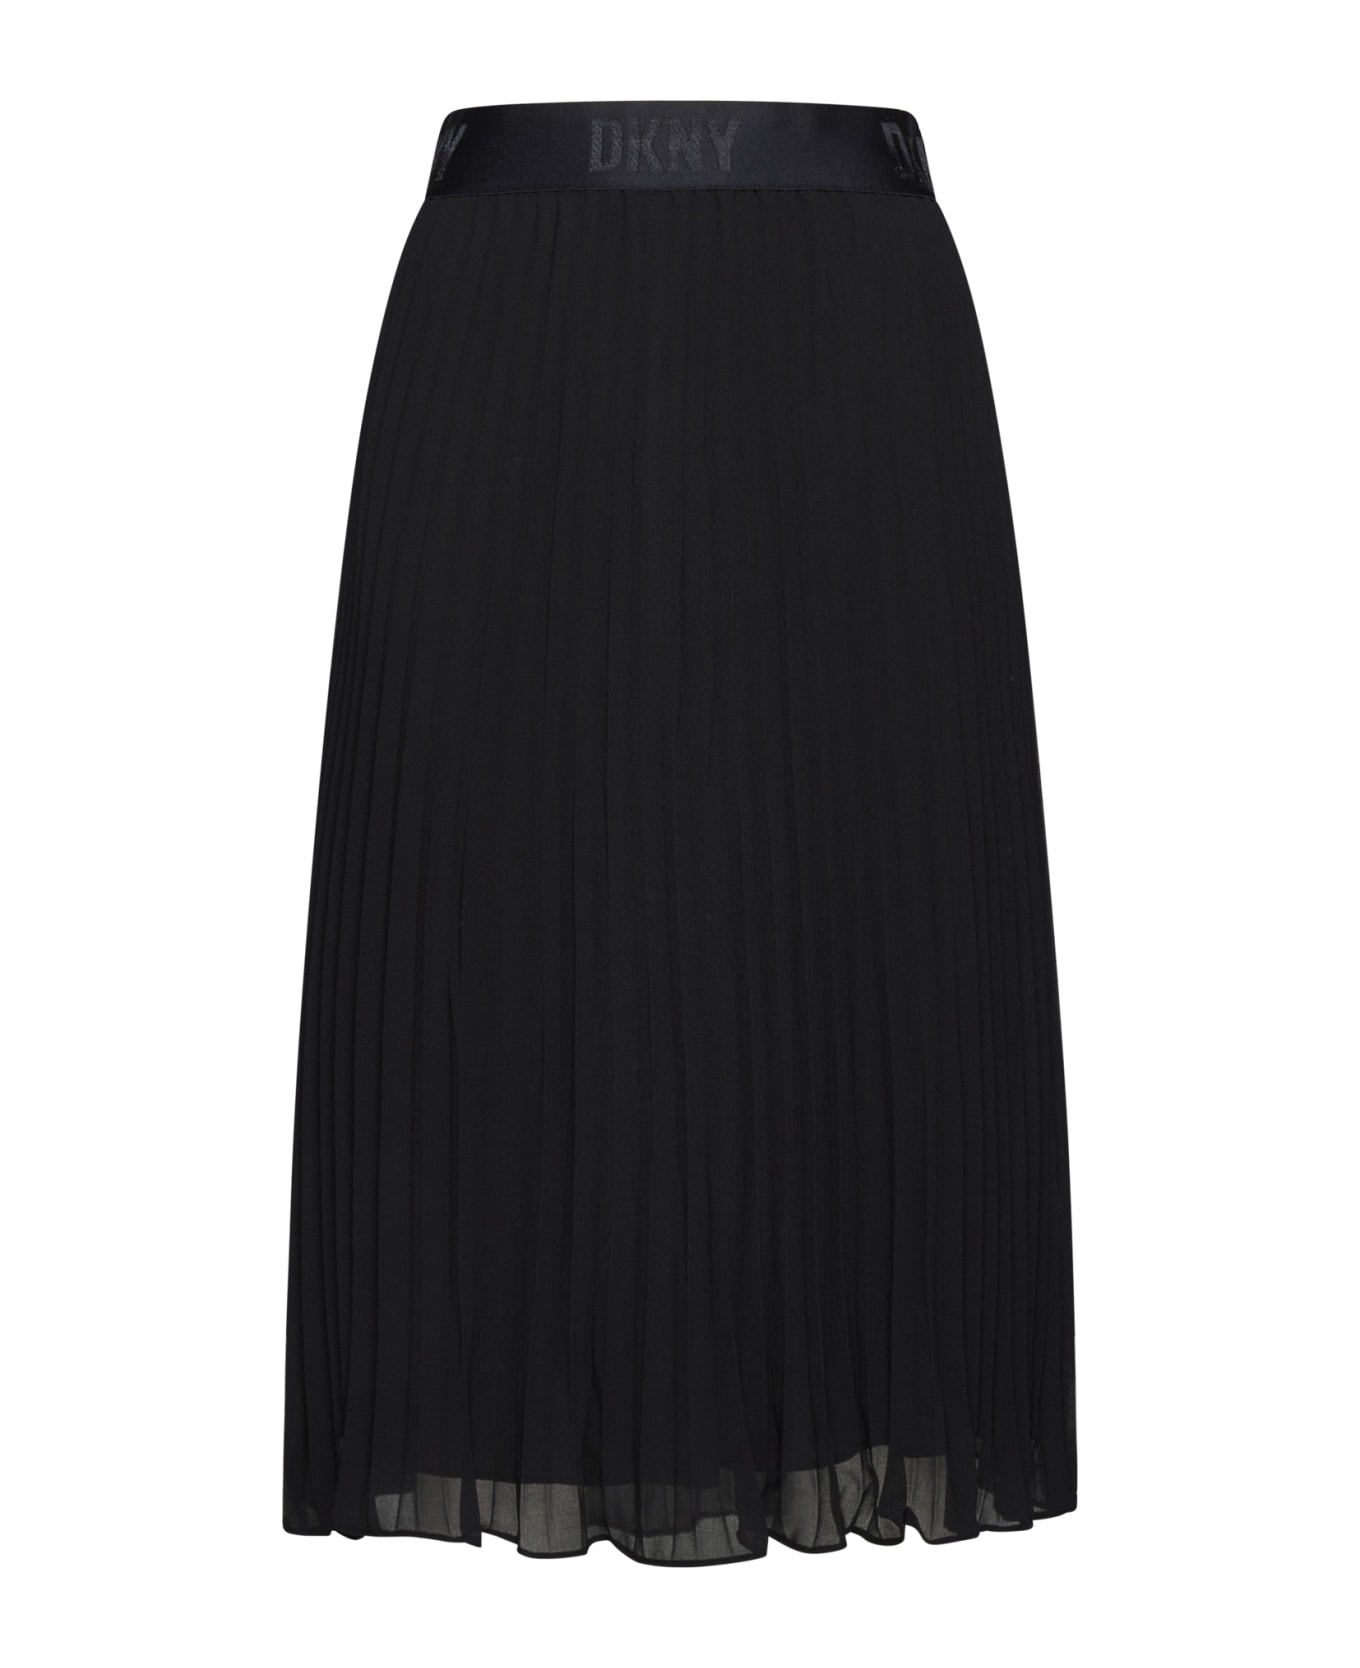 DKNY Skirt - Black スカート